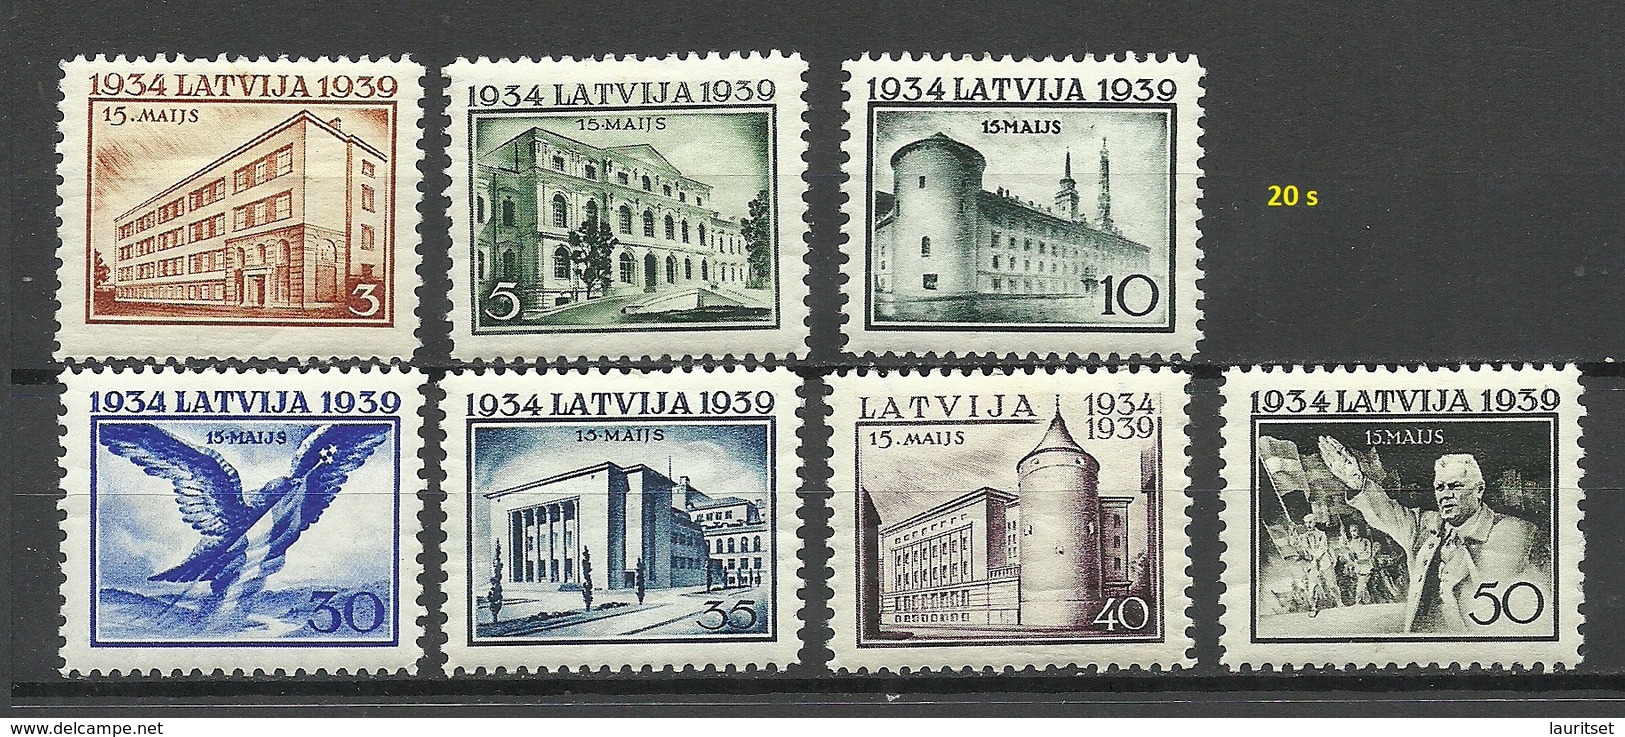 LETTLAND Latvia 1939 = 7 Values From Set Michel 271 - 278 * (Mi 274 Is Missing) - Lettland